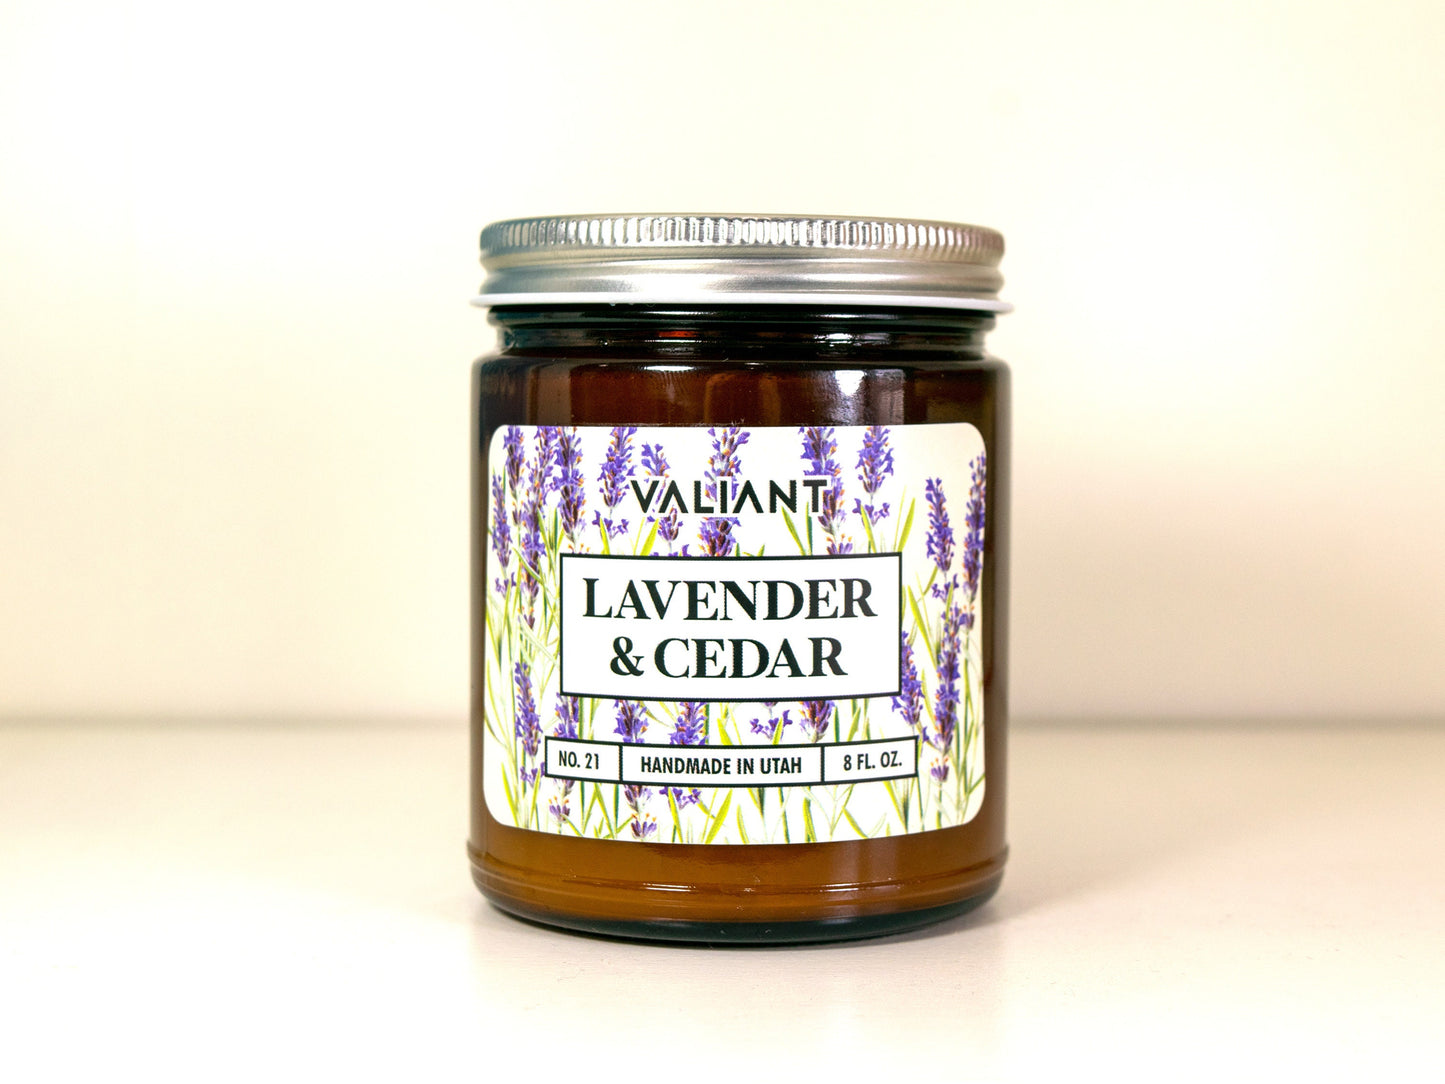 Lavender & Cedar Botanical Candle in Amber Glass